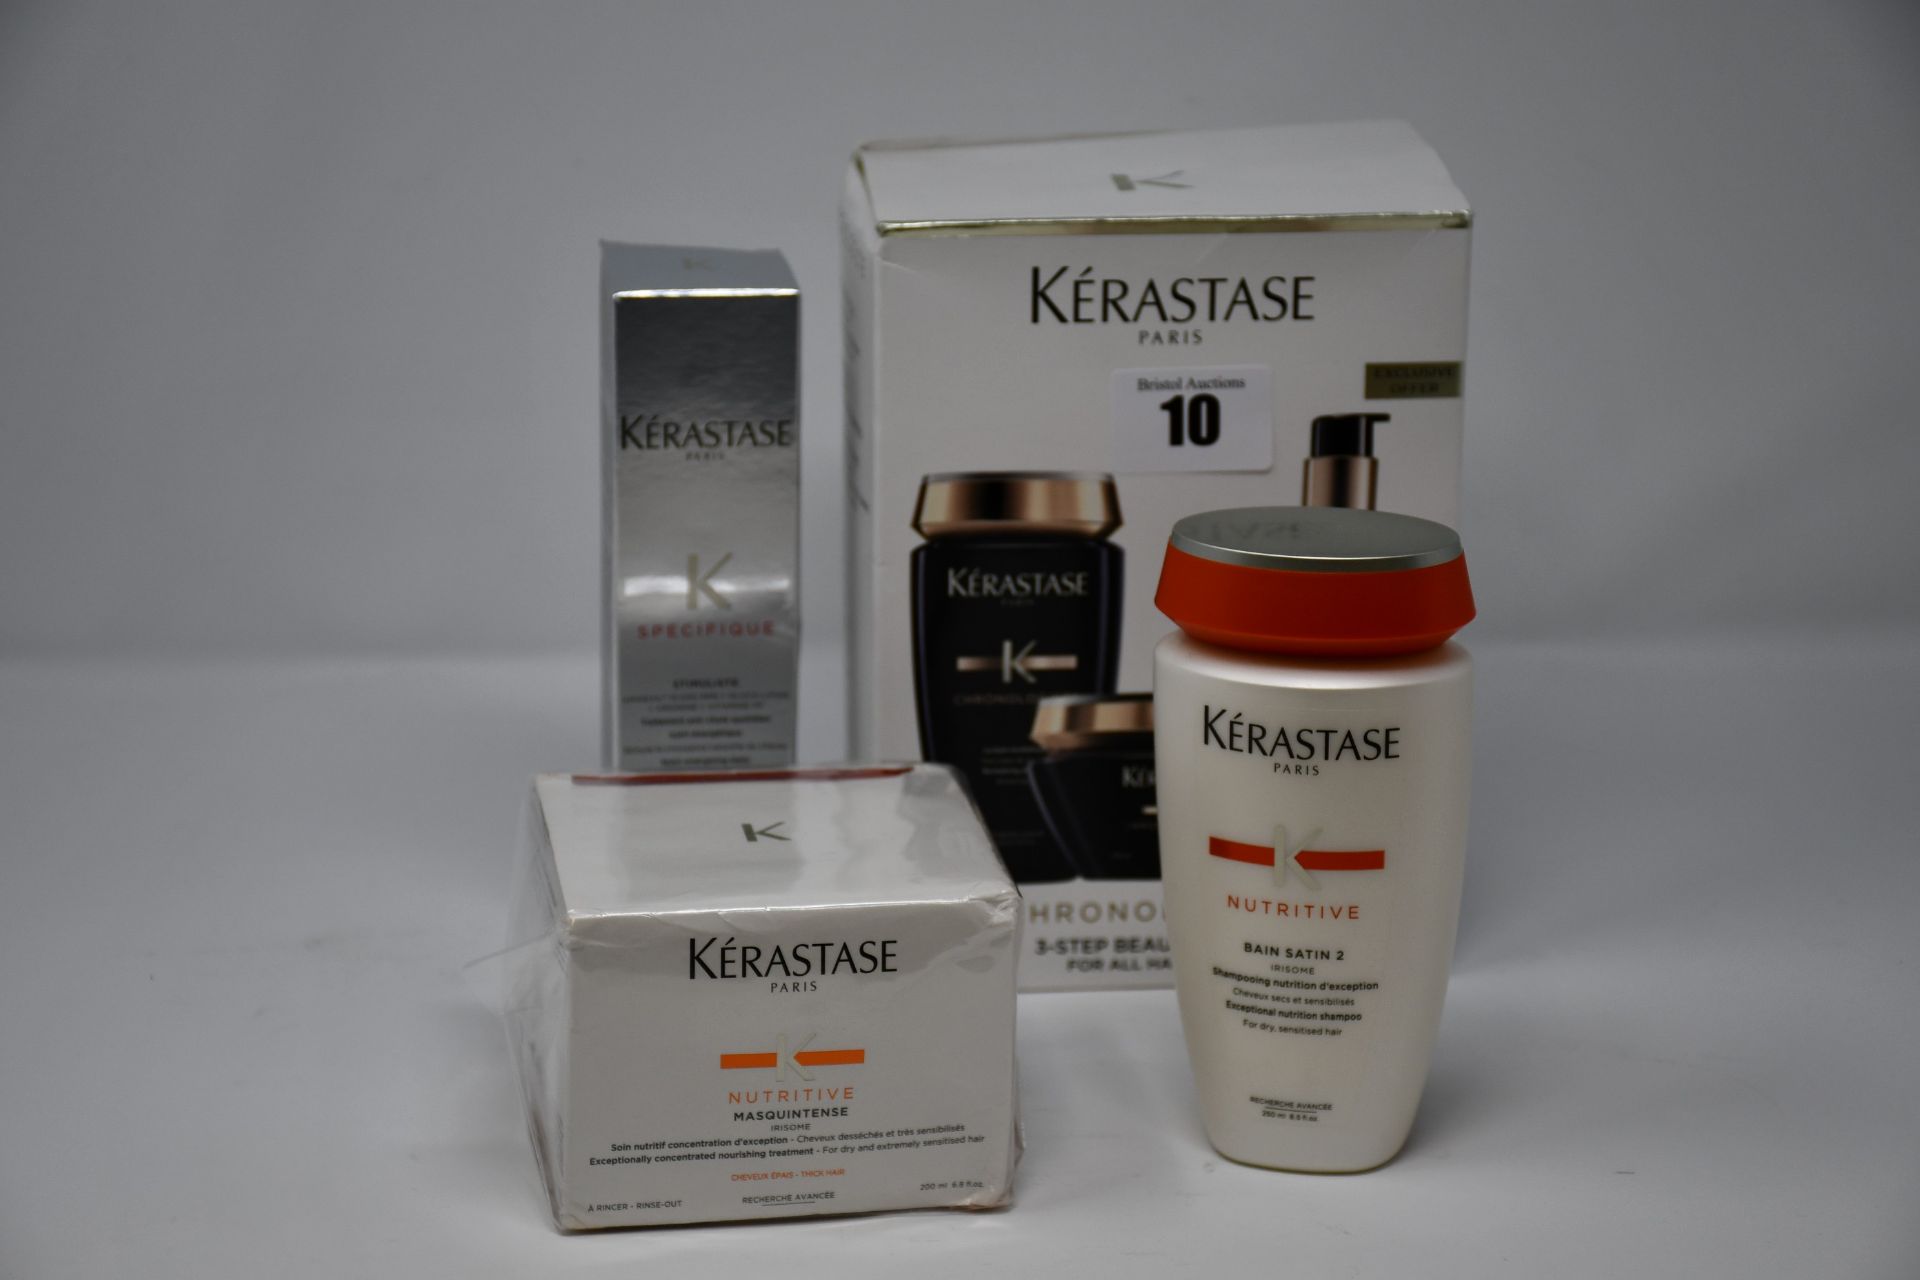 Four as new Kerastase Paris hair care products: 3-Step Beauty Ritual, Mutritive Masquintense (